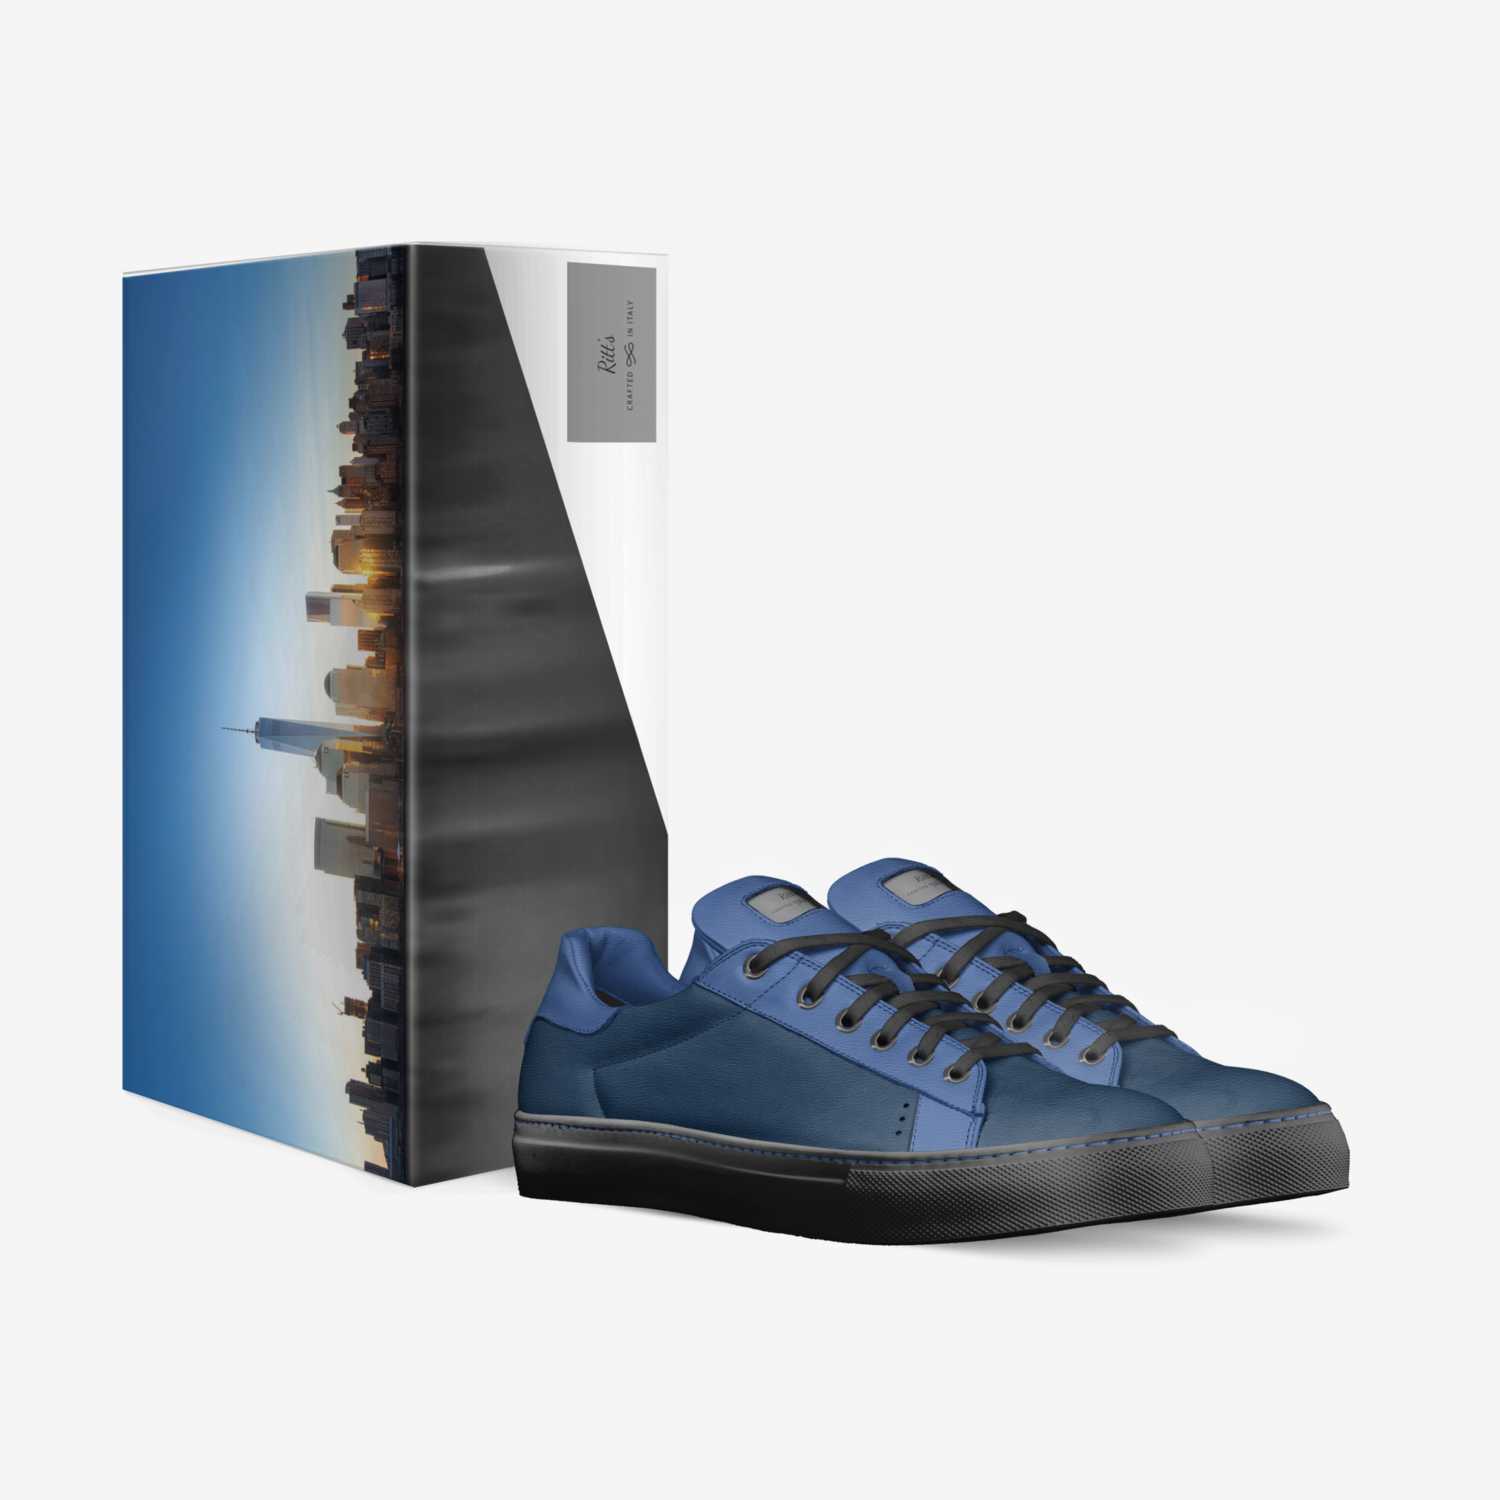 Ritt's custom made in Italy shoes by Matthew Rittenhouse | Box view